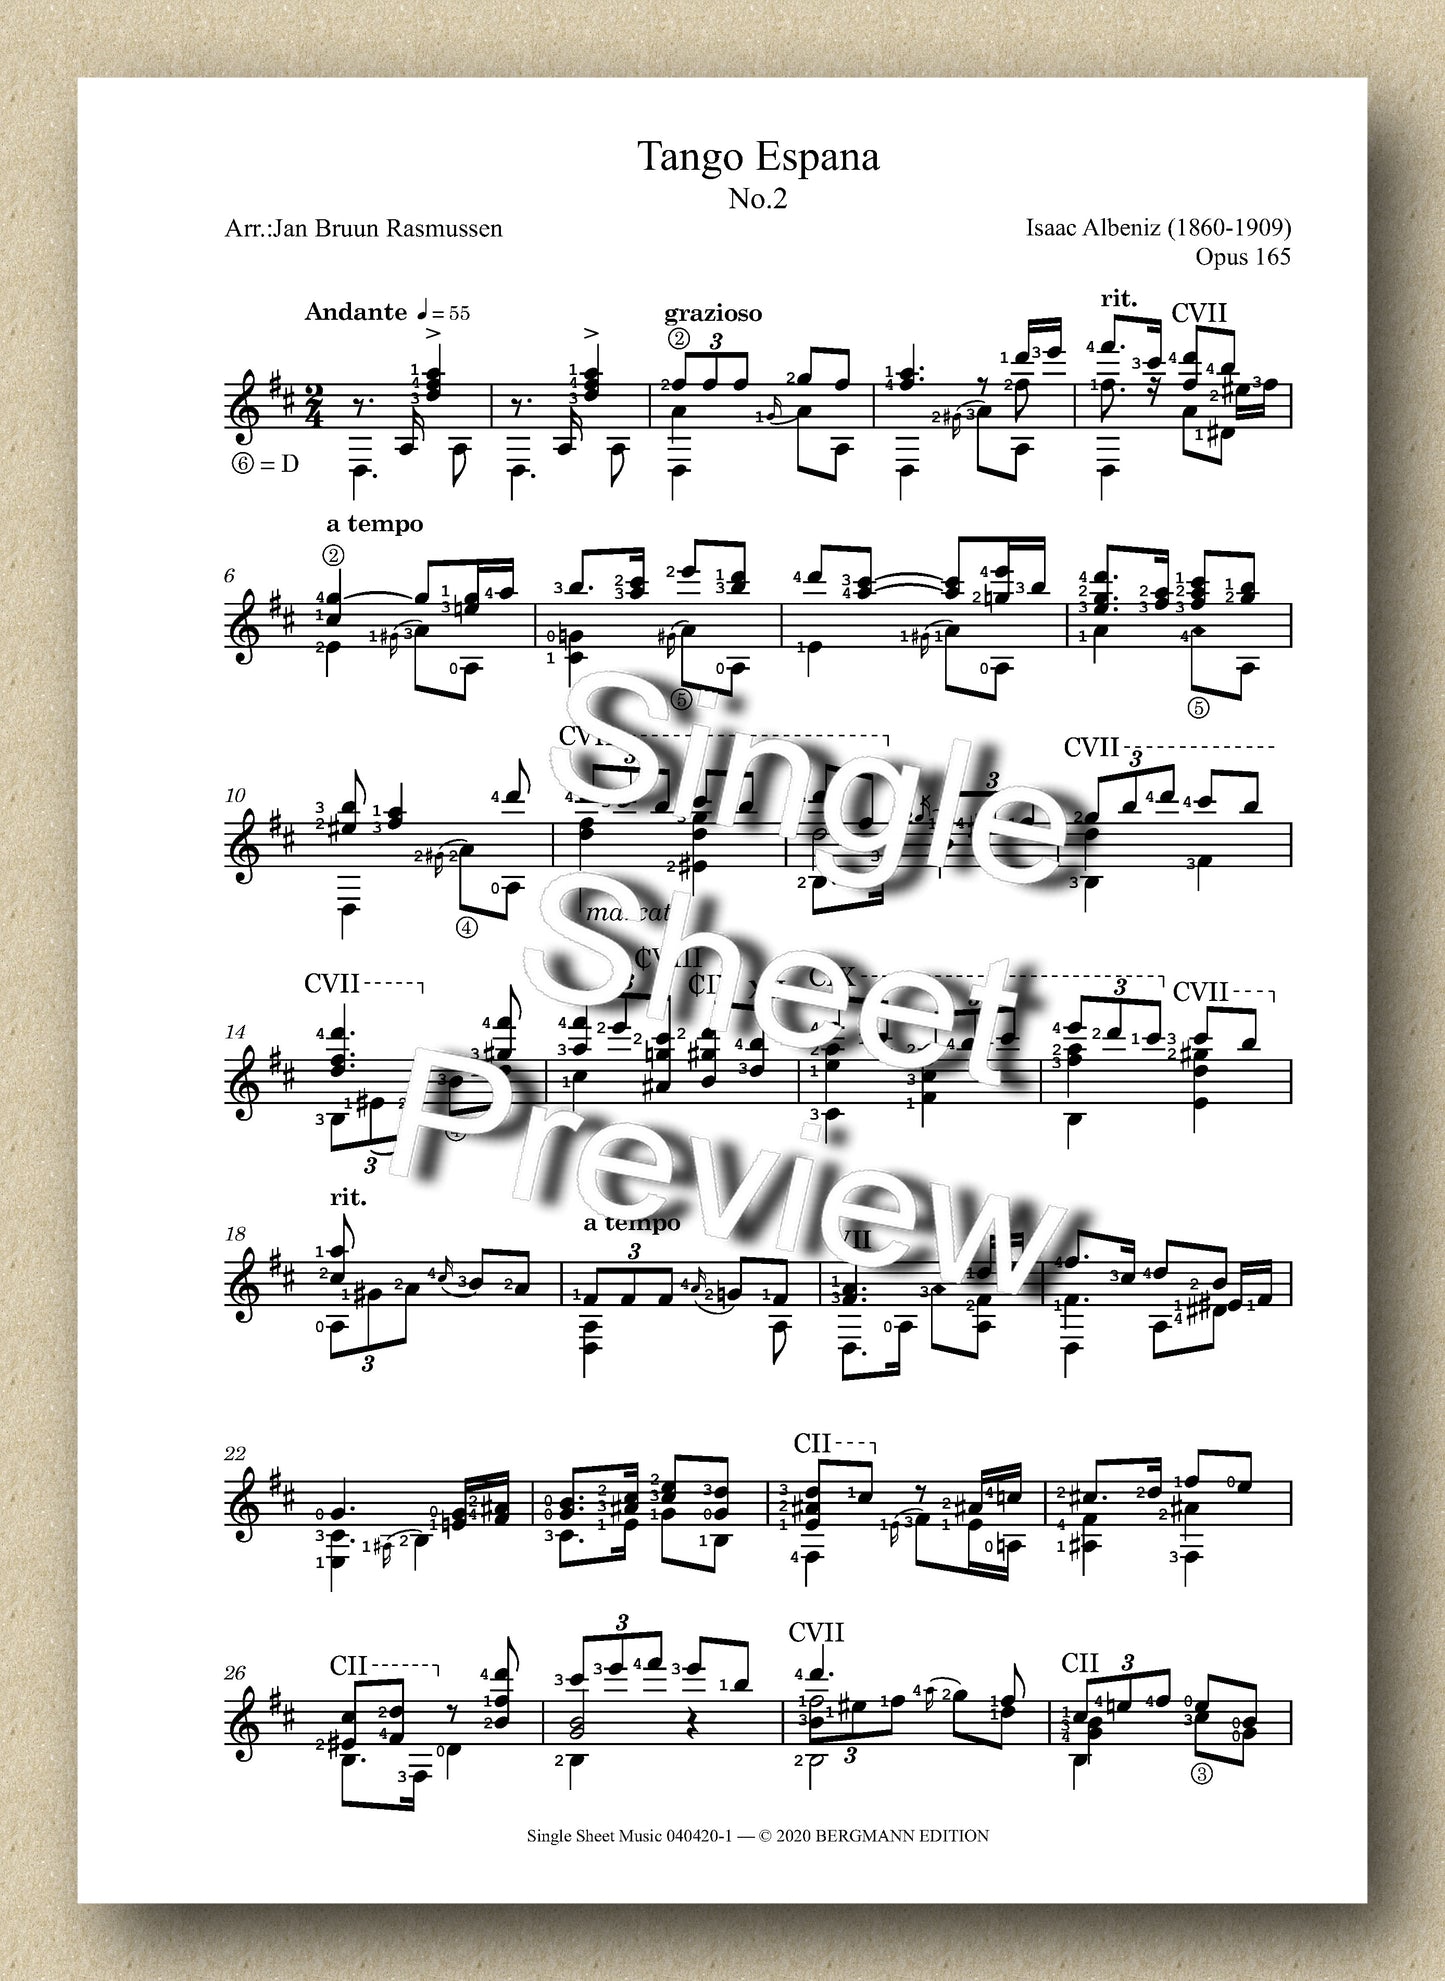 Tango Espana Op. 165, no. 2, Isaac Albeniz - preview of the music score